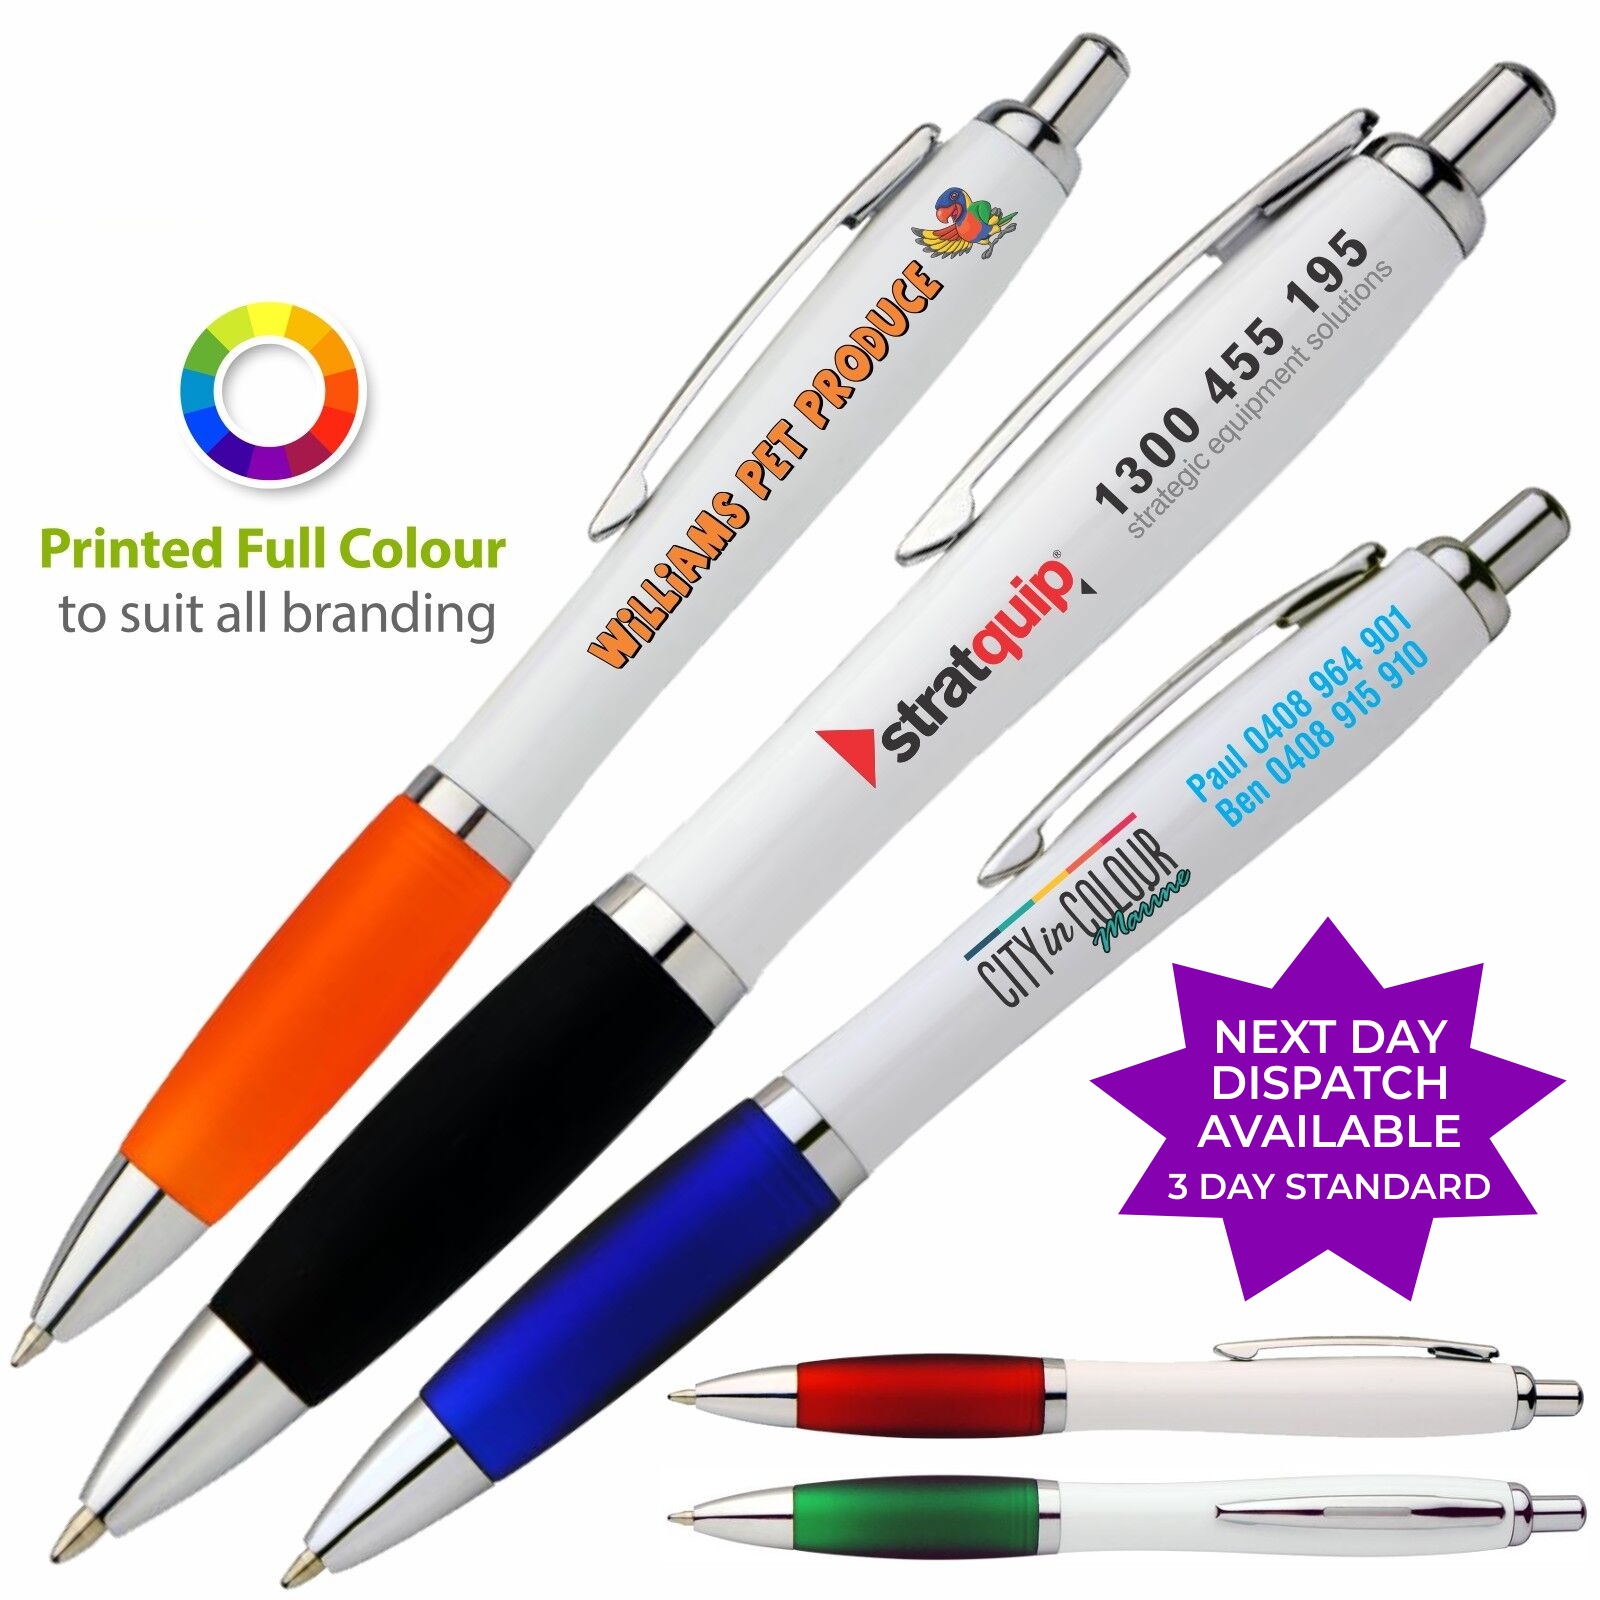 EP Range Villa Pen Full Colour Print biro